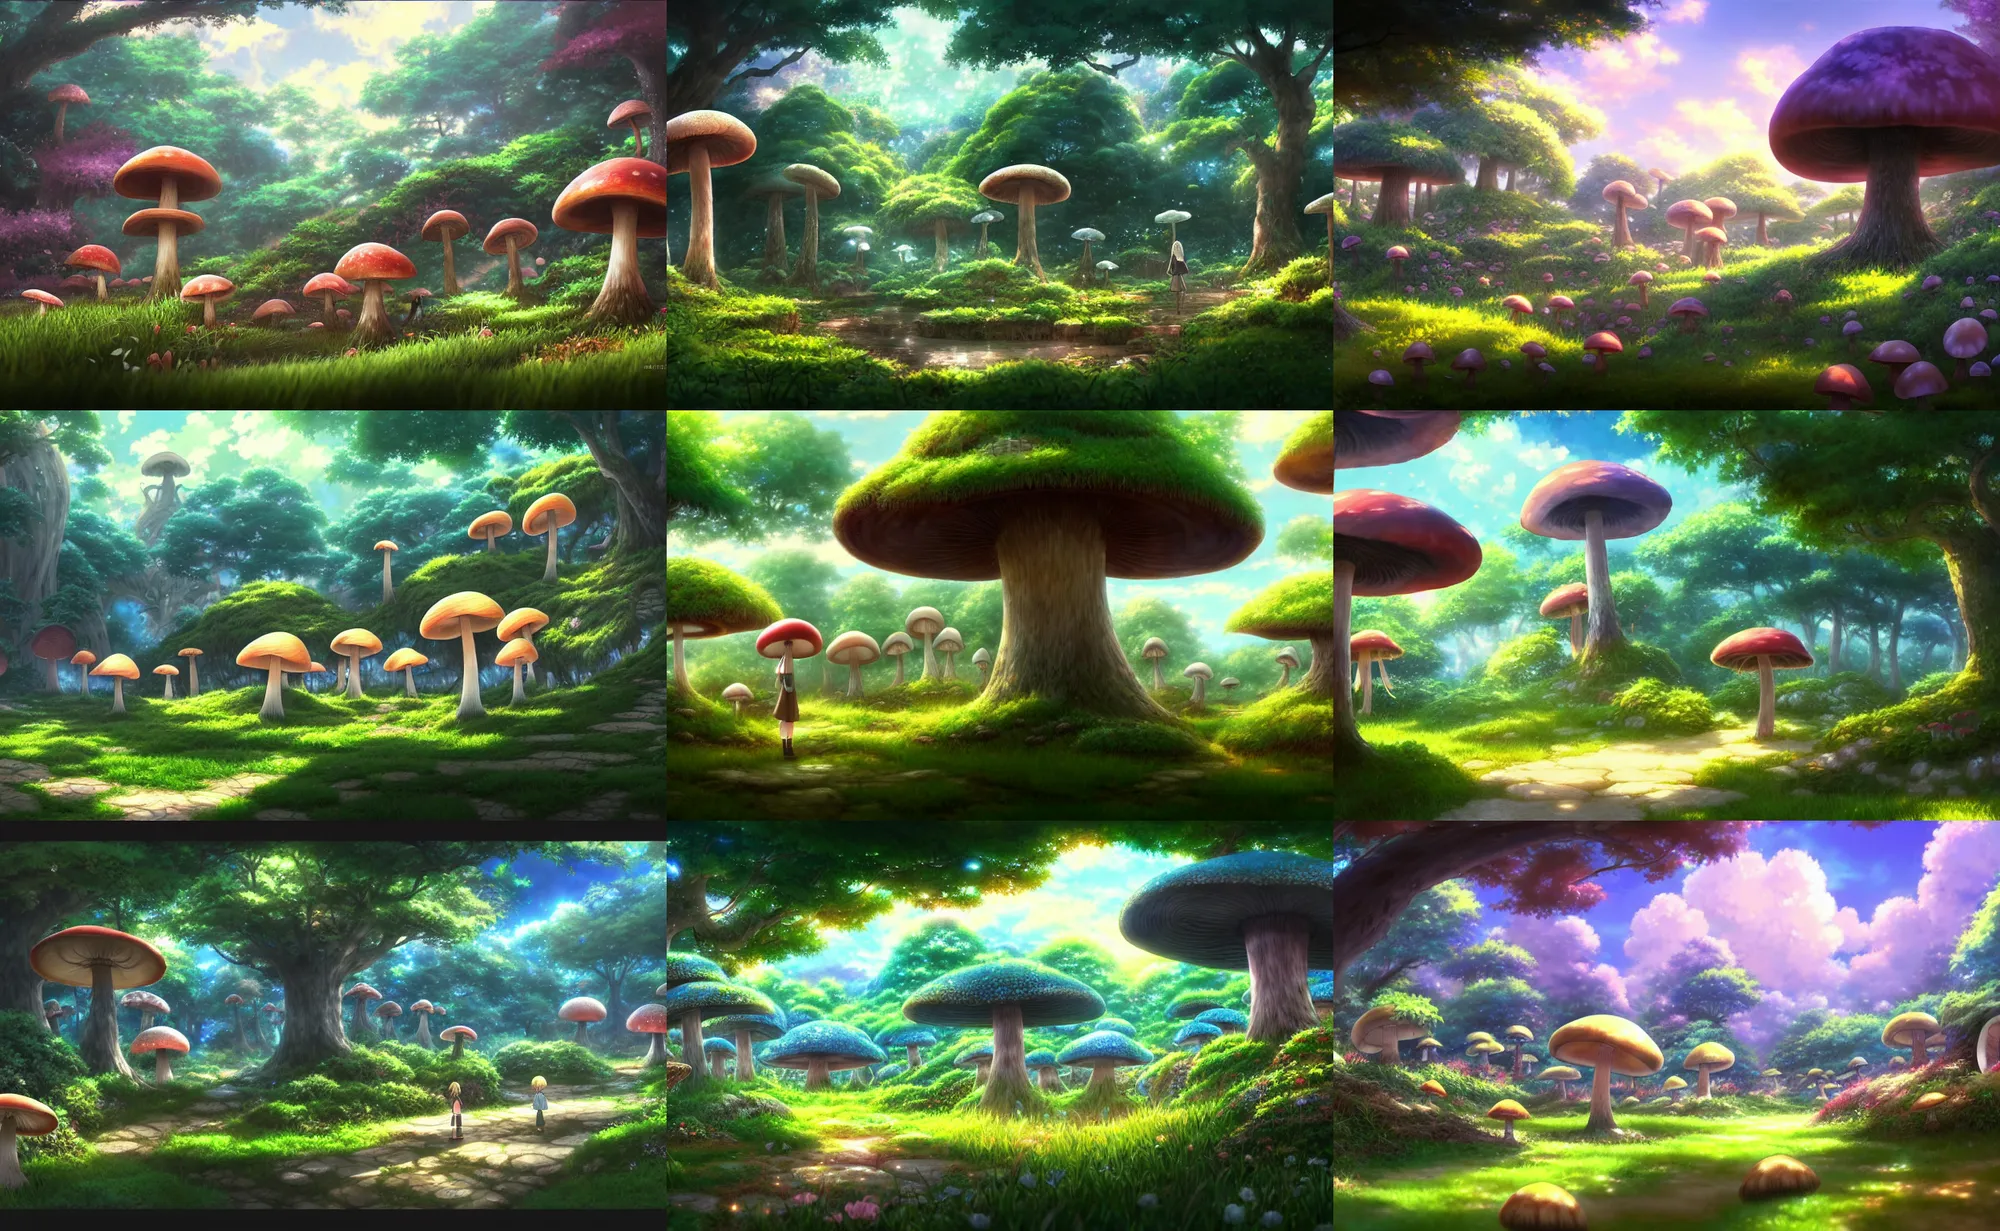 Prompt: an anime movie background matte painting of a secret mushroom garden, fantasy, by makoto shinkai, trending on artstation, highly detailed